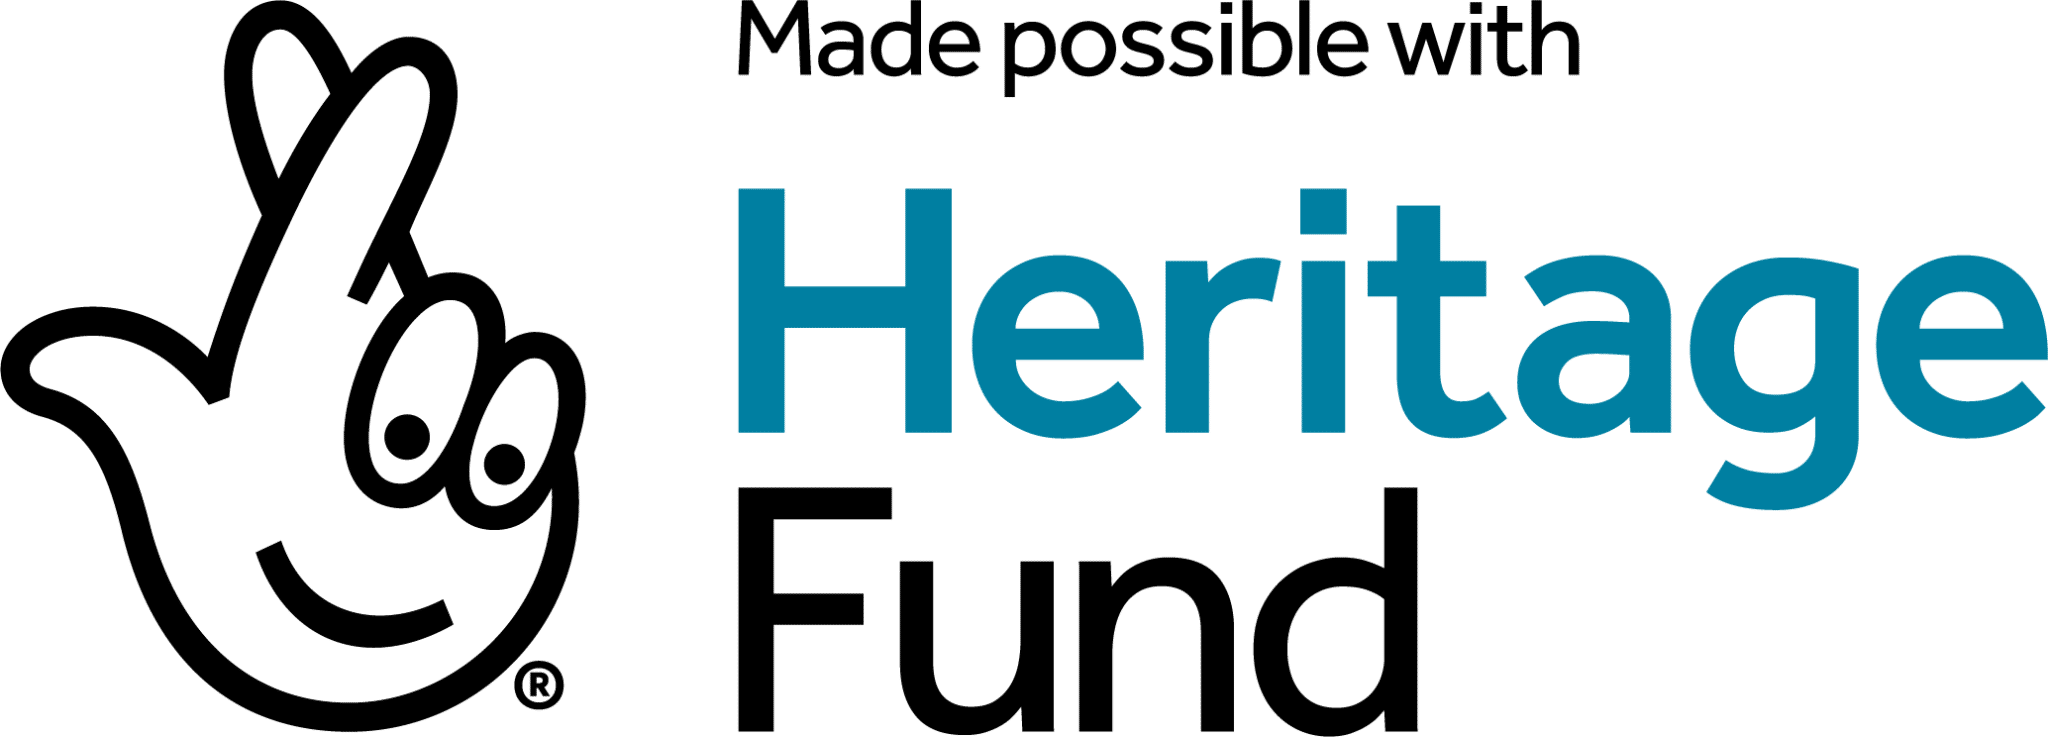 Heritage Fund UK